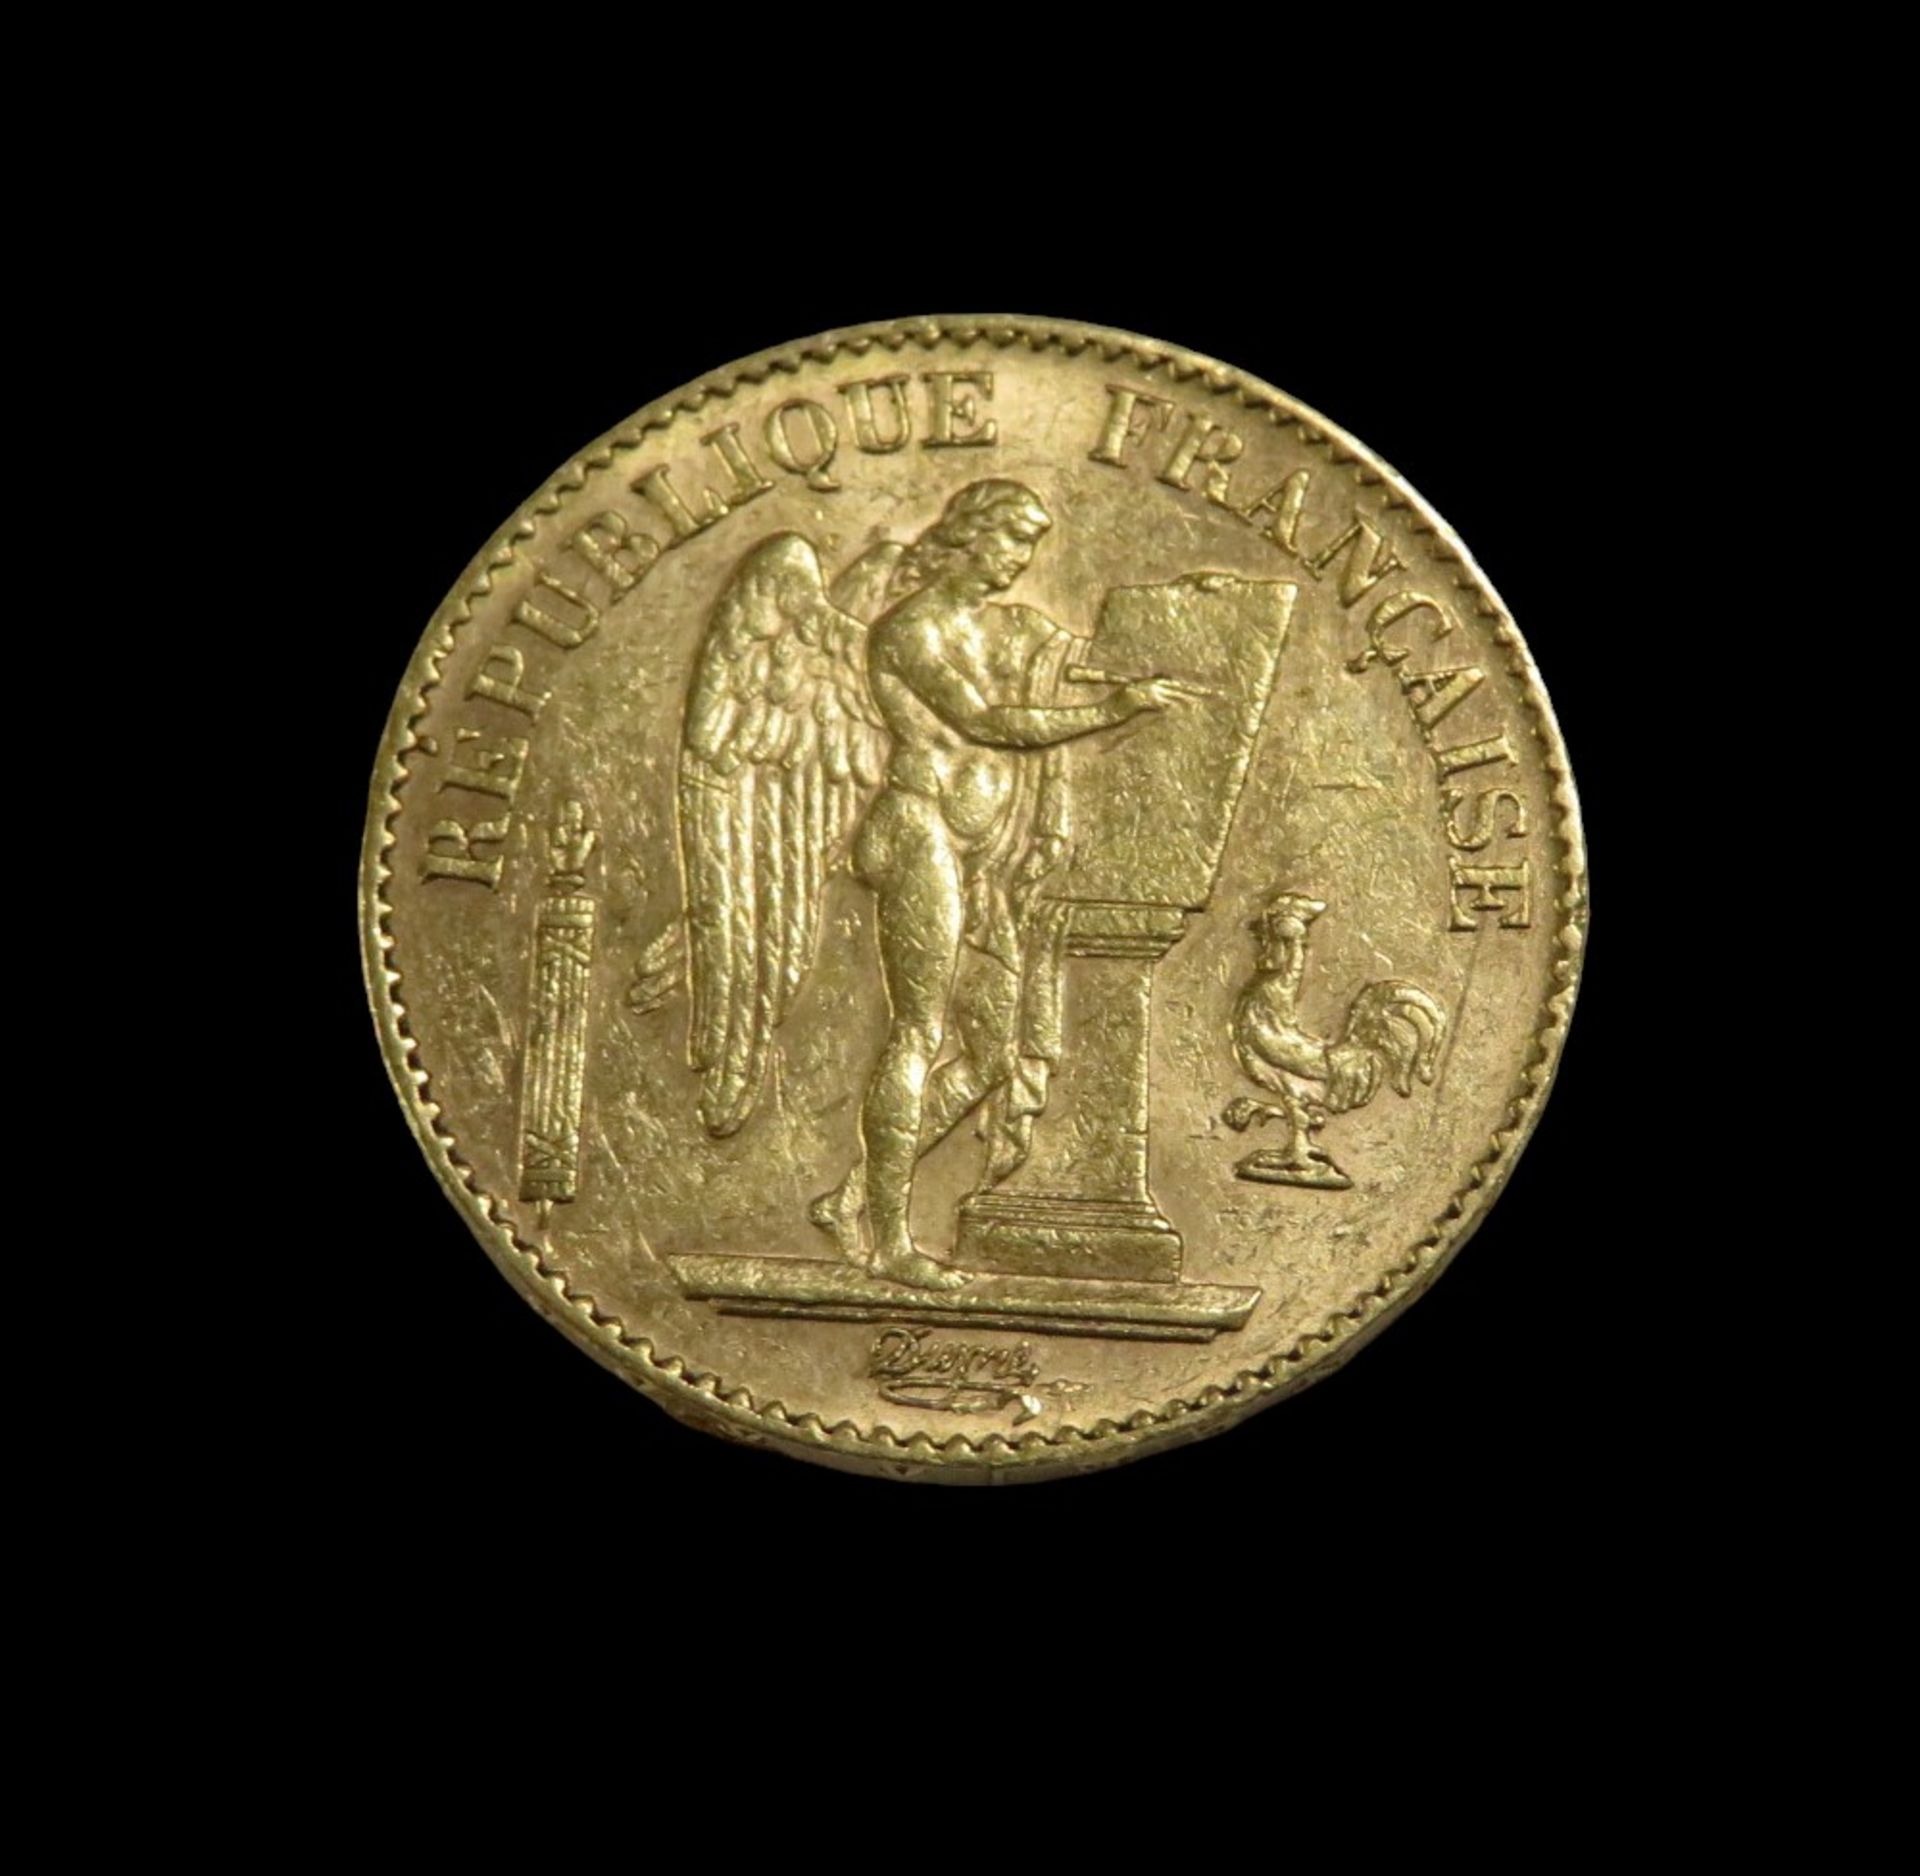 Goldmünze, 20 Francs, Genius/Stehender Engel, 1896, Gold 900/000, 6,4 g, d 2,1 cm.